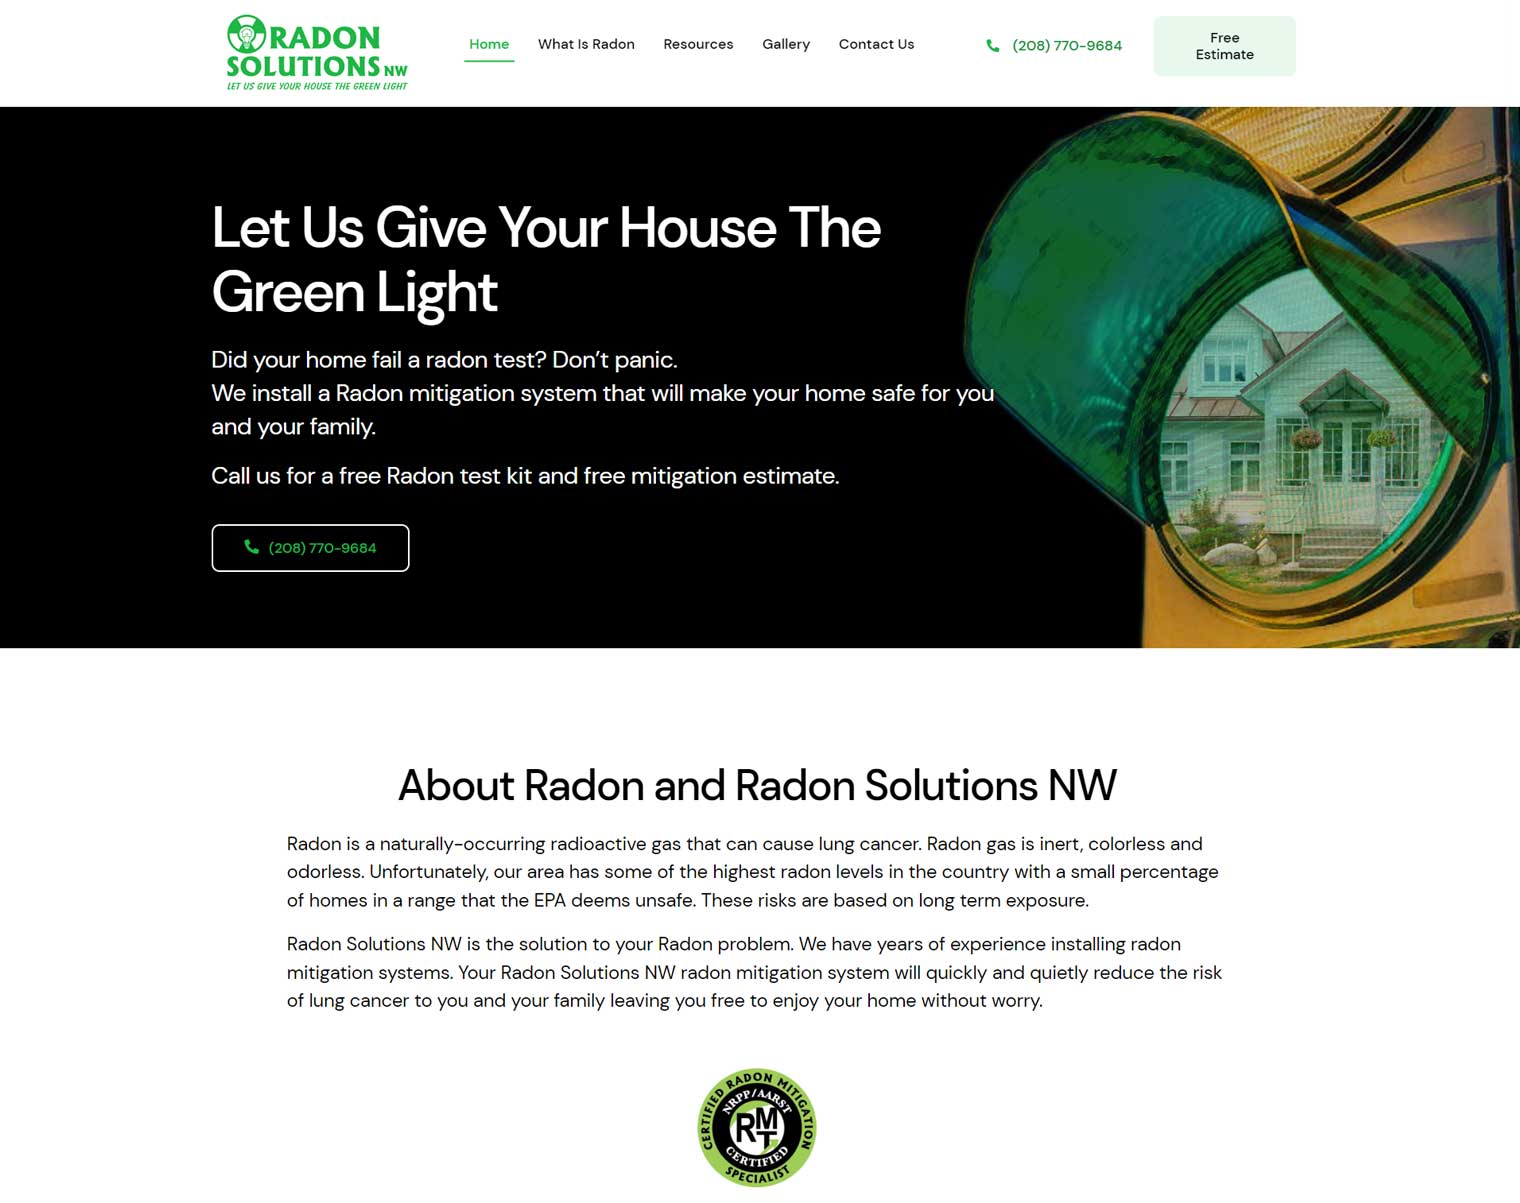 Radon Solutions NW